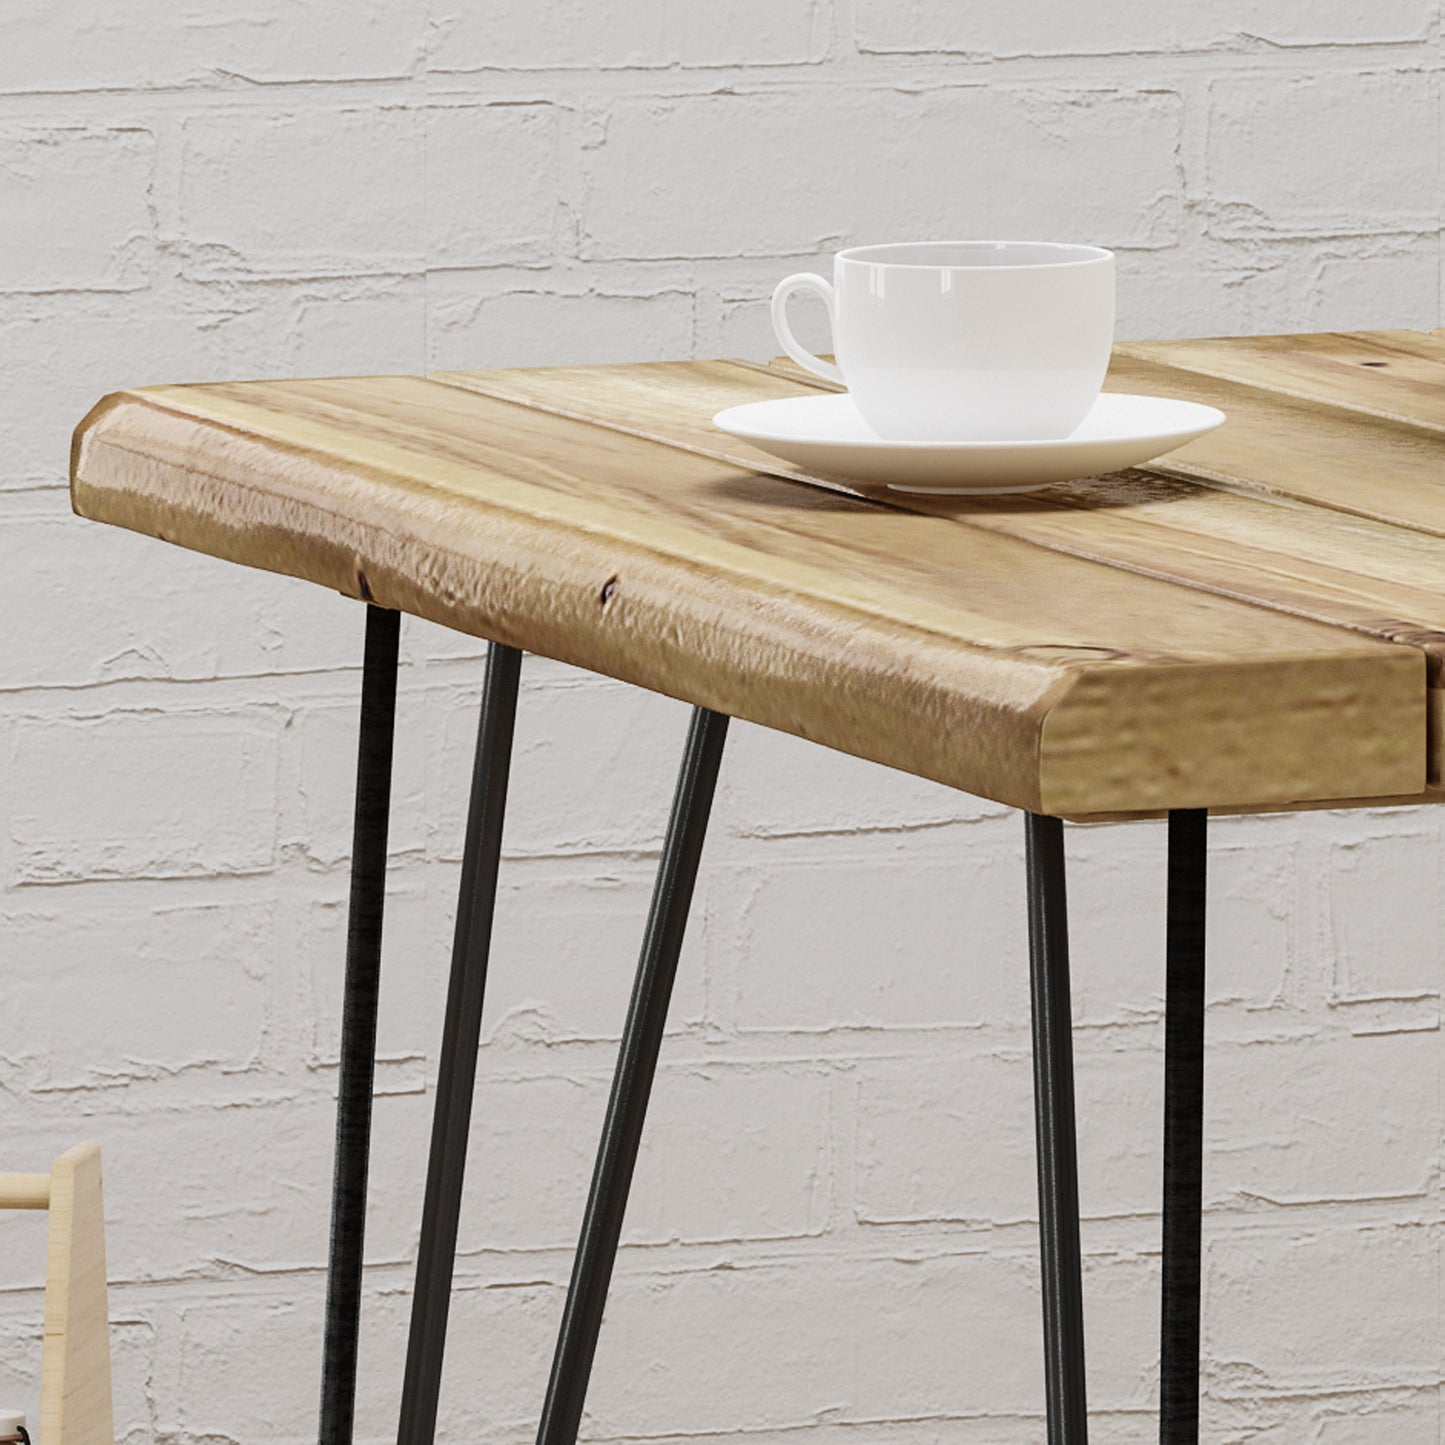 Avy Indoor/Outdoor Industrial Acacia Wood Dining Table, Teak and Rustic Metal